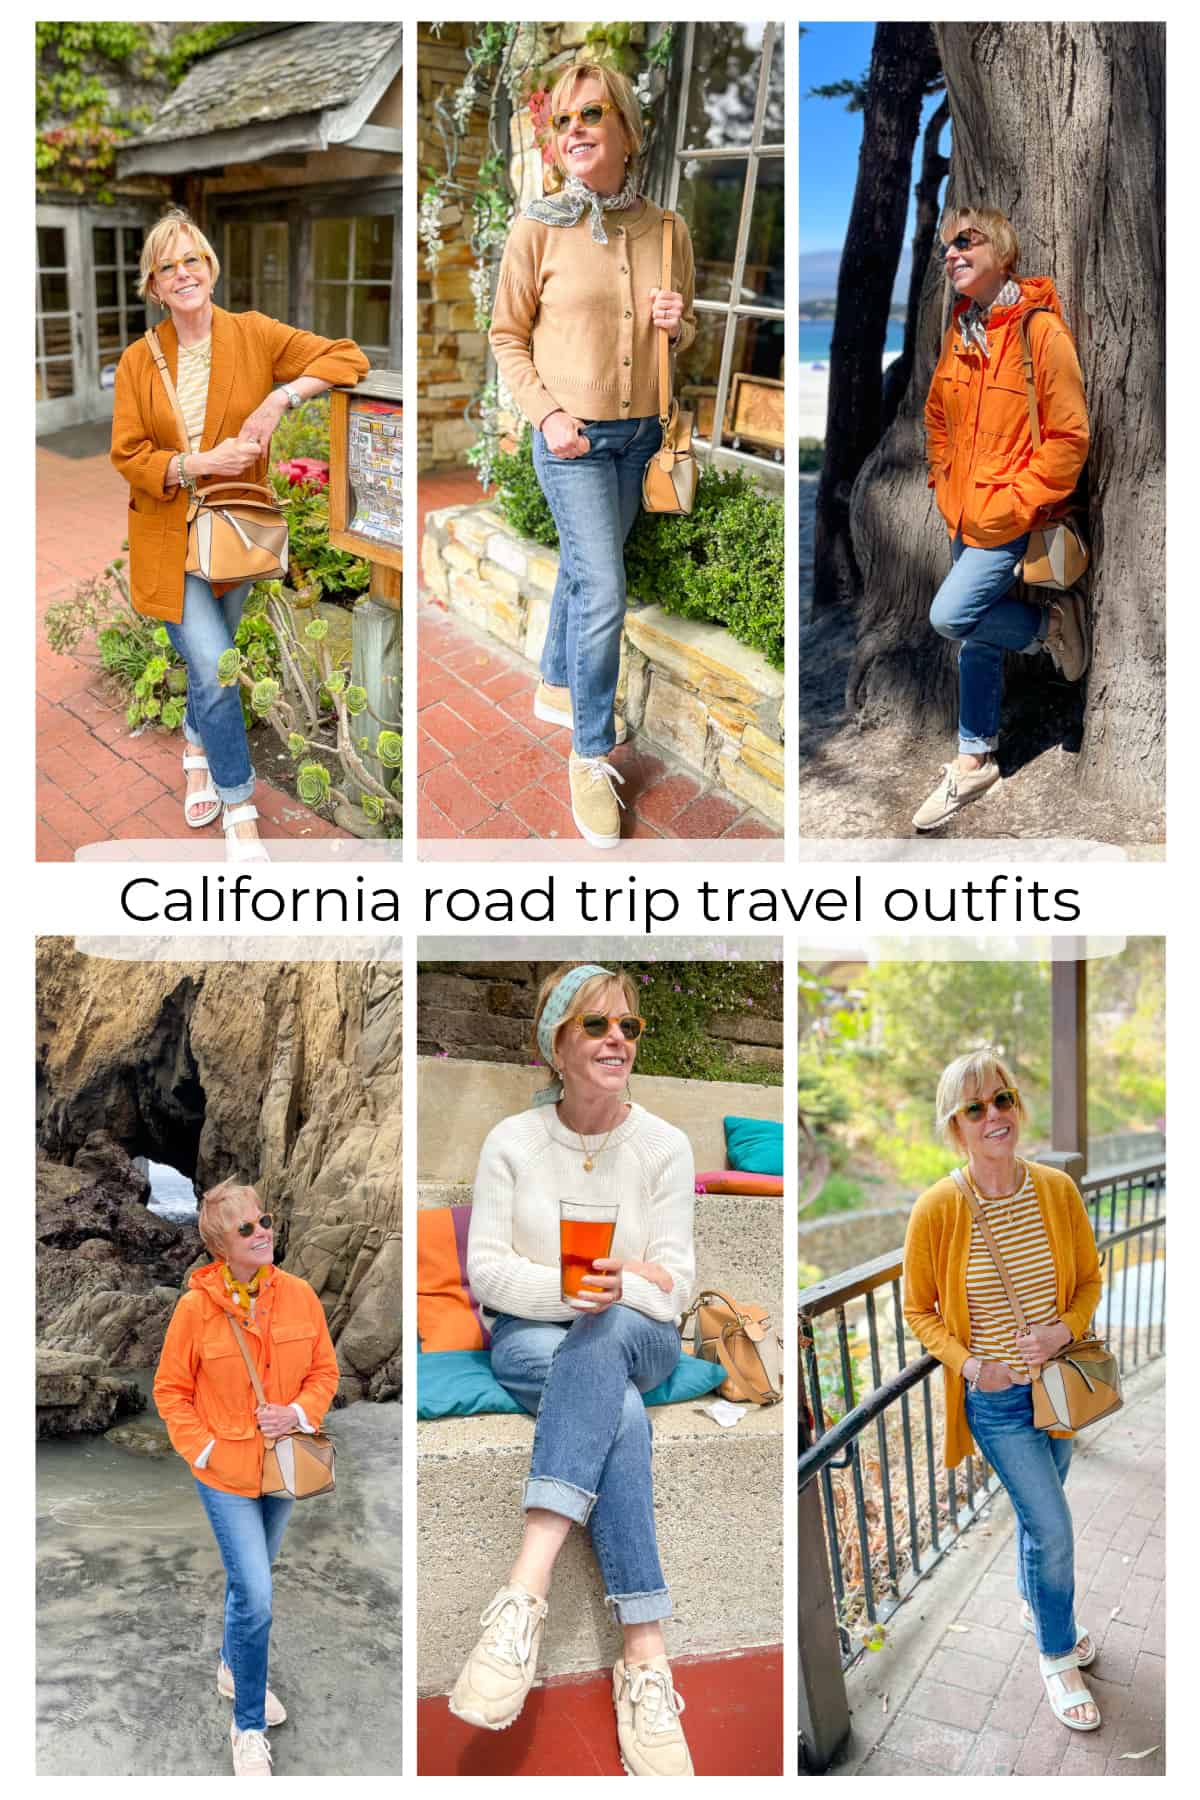 Summer travel outfits, California road trip - une femme d'un